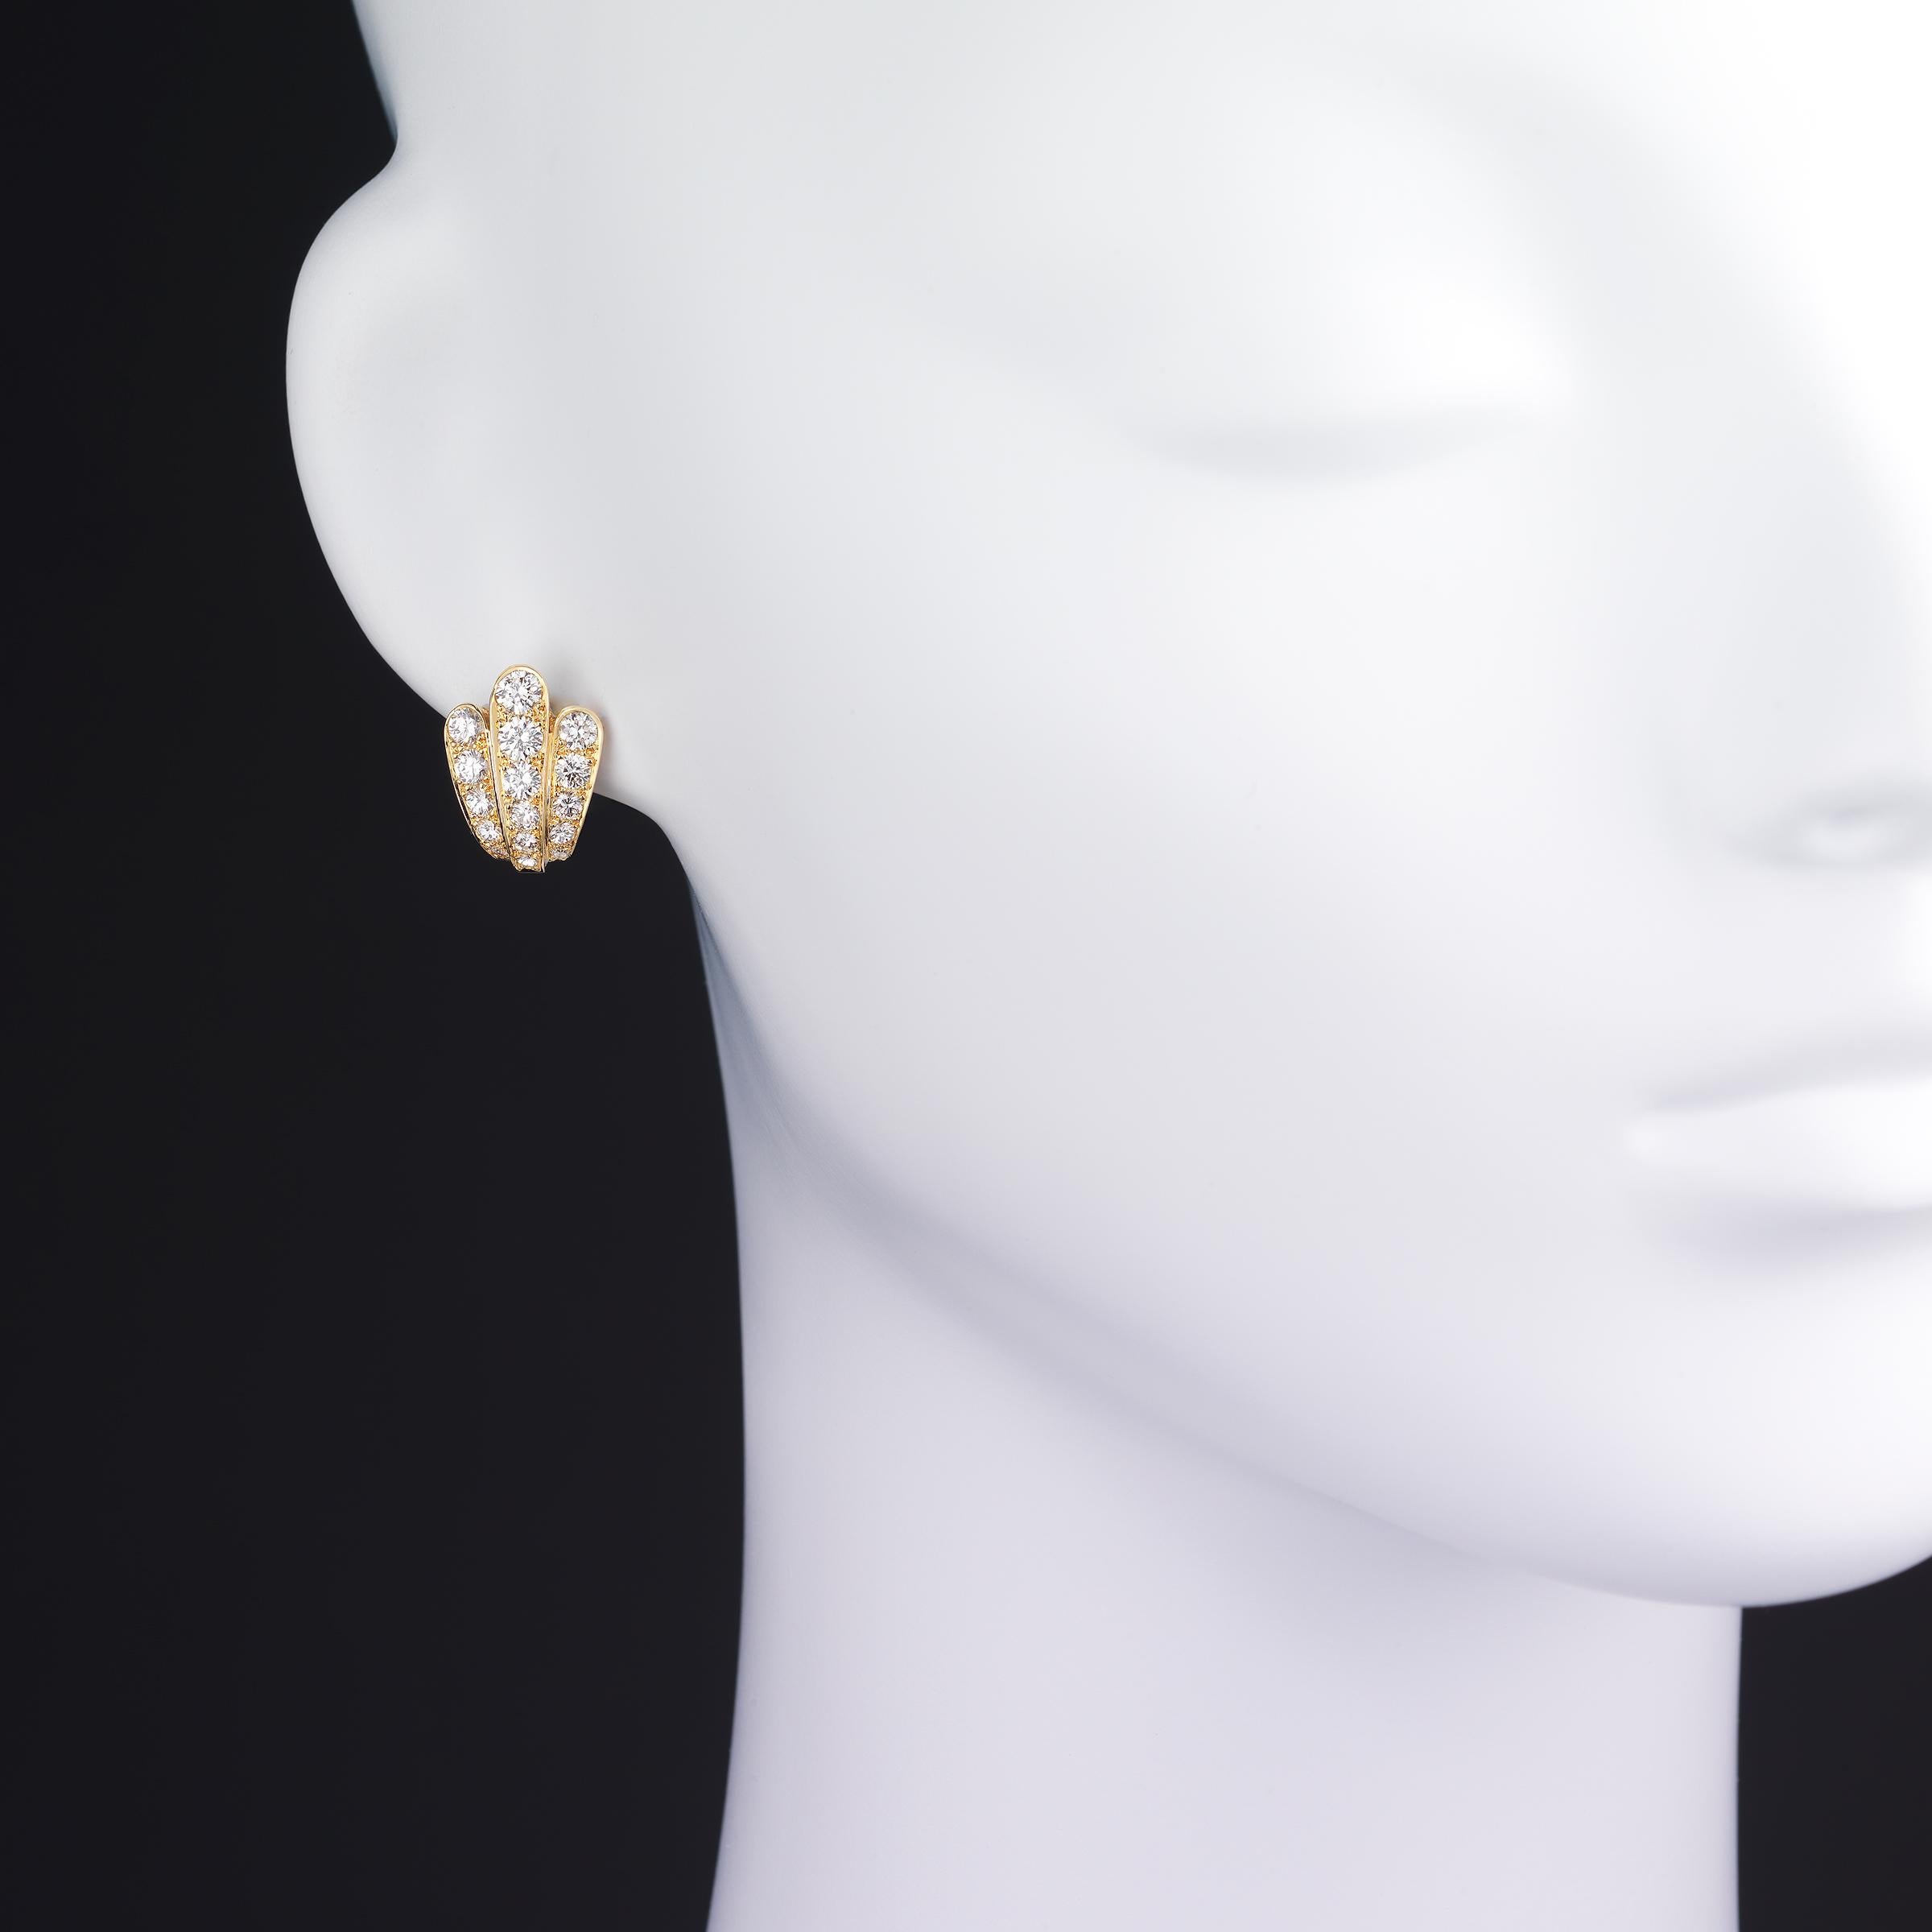 Brilliant Cut Van Cleef & Arpels Diamond Scallop Shell Vintage Earrings in 18K Gold